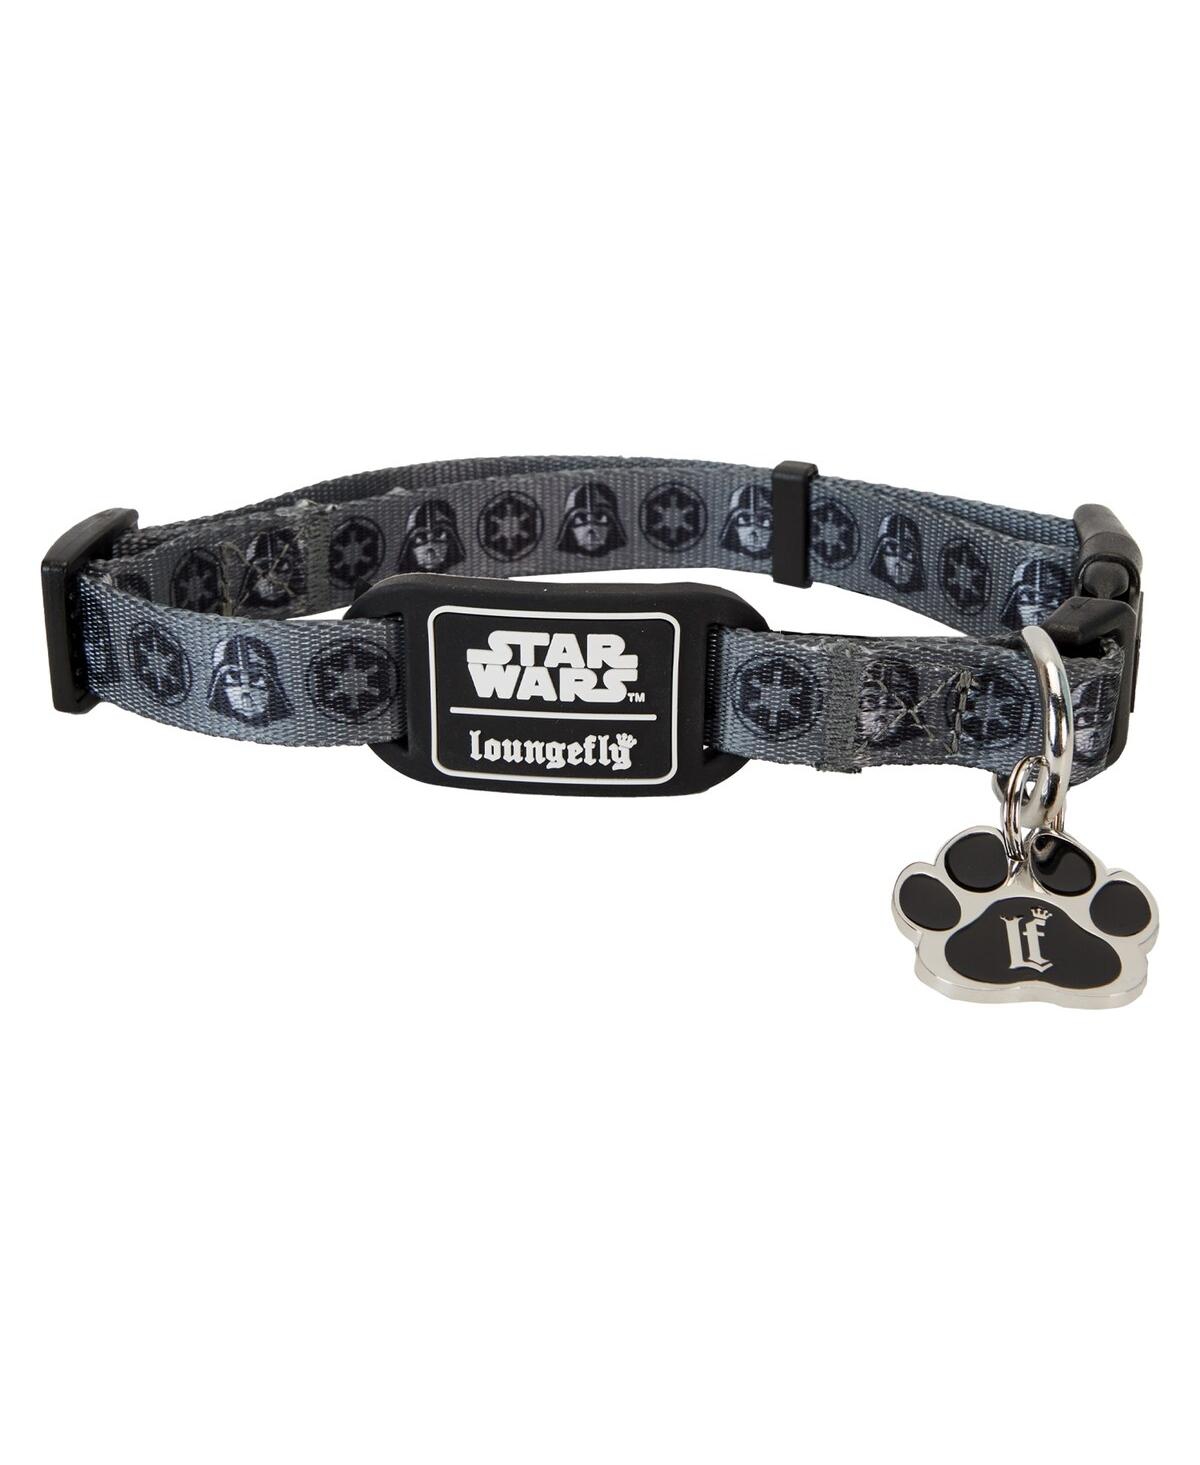 Darth Vader Star Wars Dog Collar - Multi